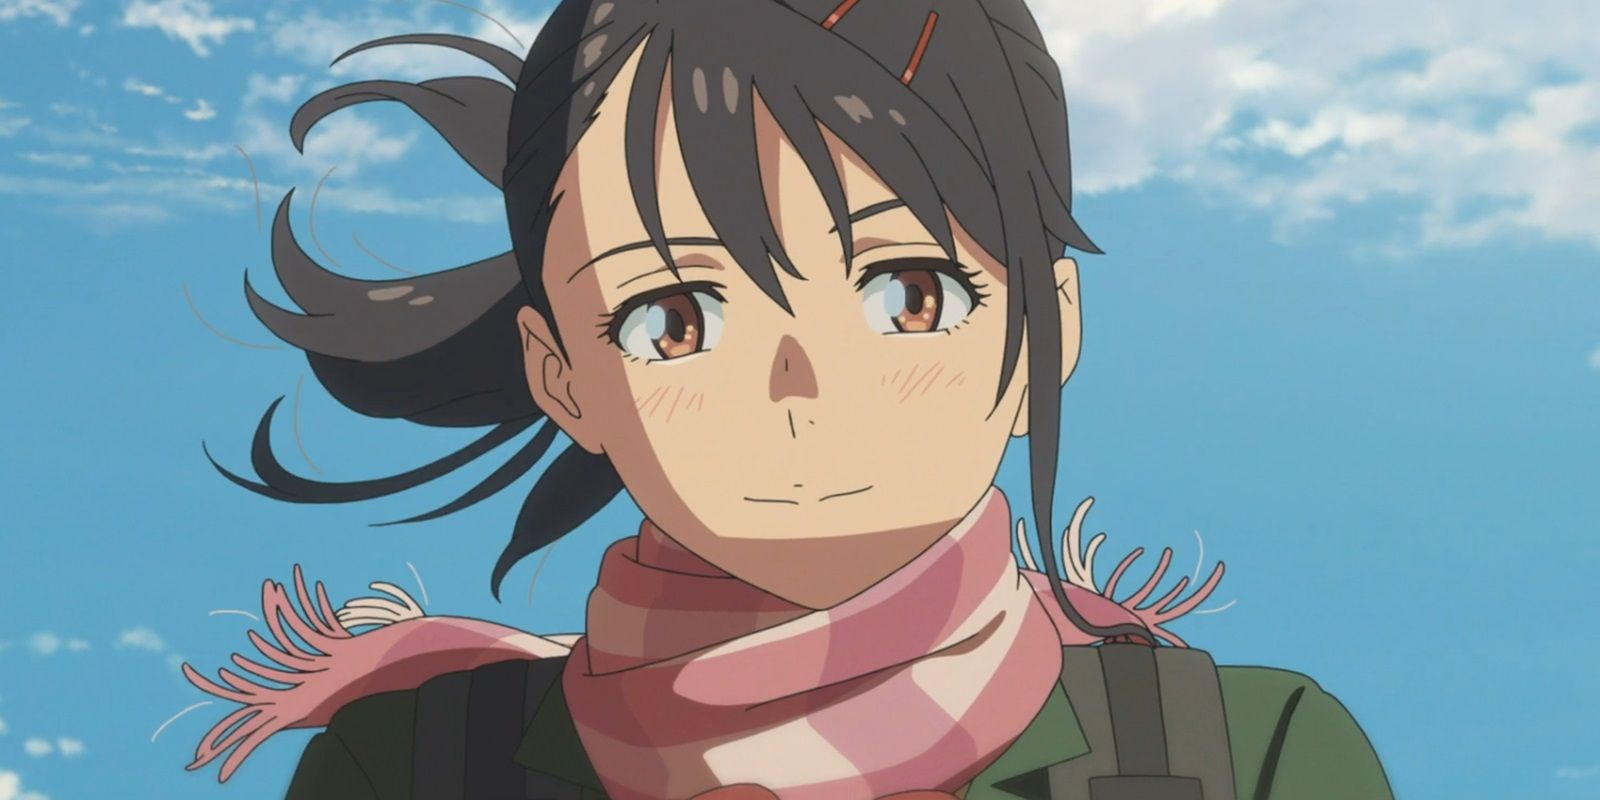 Suzume di adegan terakhir film, tersenyum hangat sementara rambut dan syalnya tertiup angin di hari yang cerah.